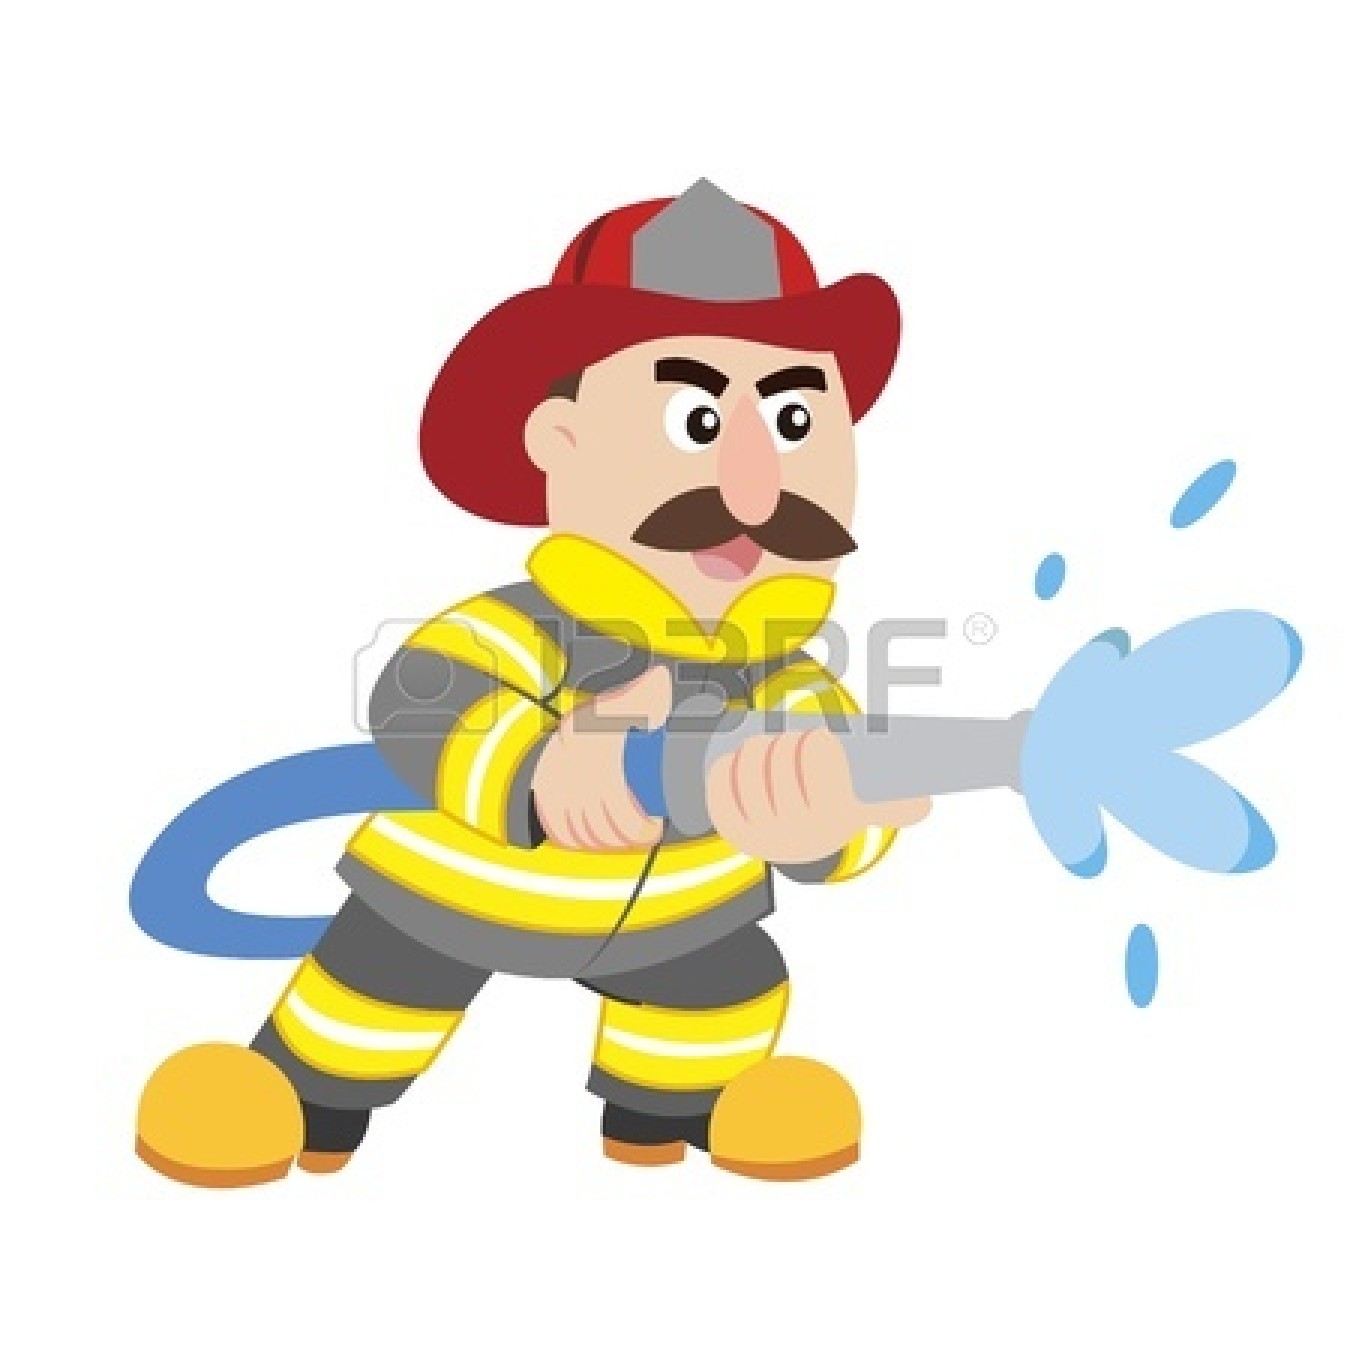 Fireman putting out fire clipart.